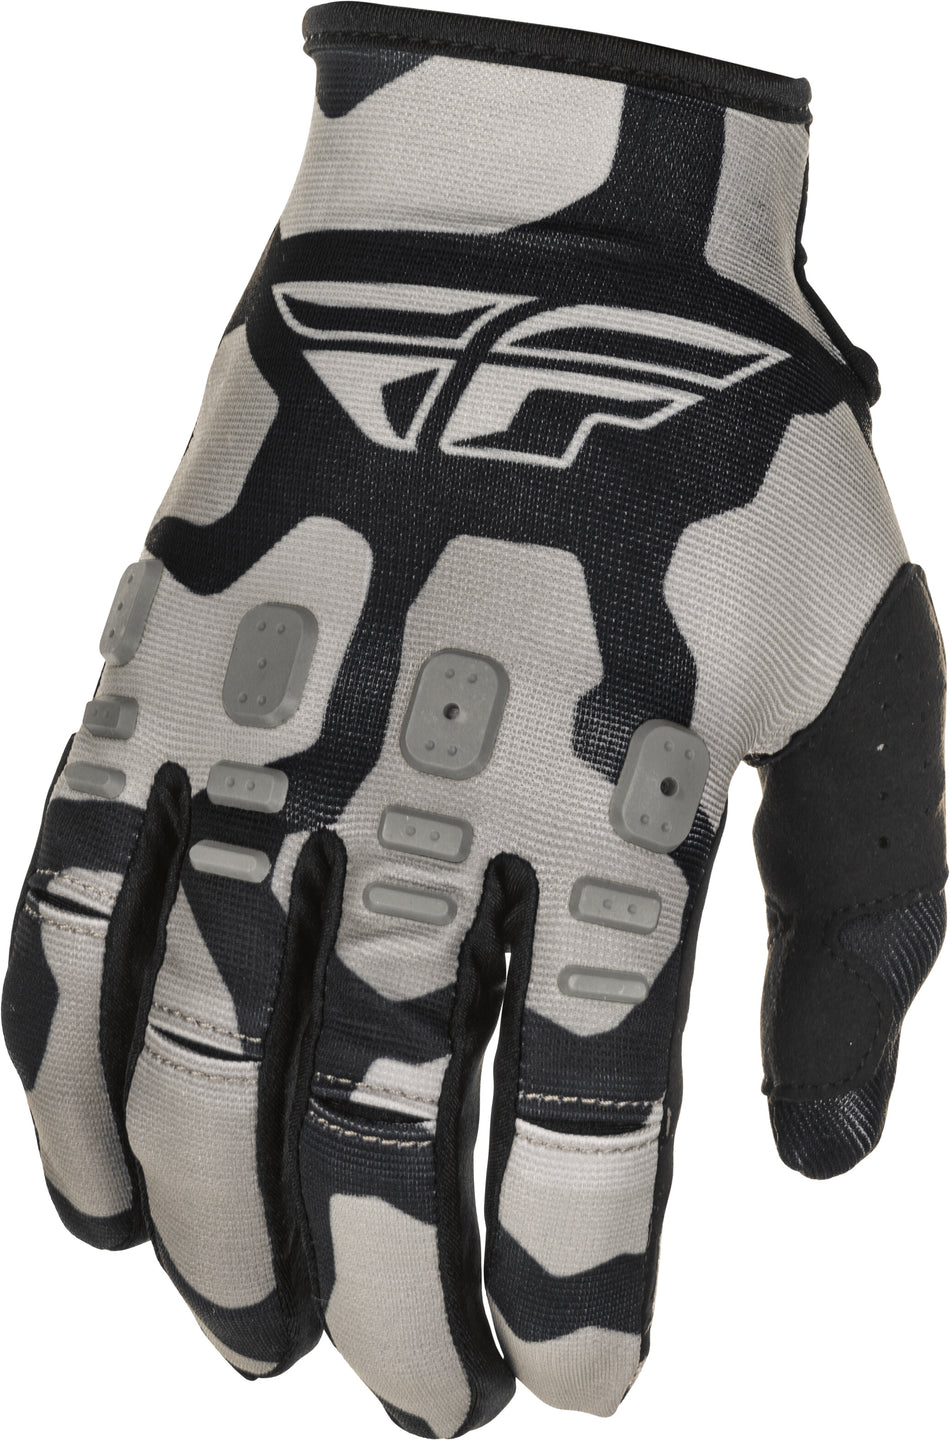 FLY RACING Kinetic K221 Gloves Black/Grey Sz 13 374-51013